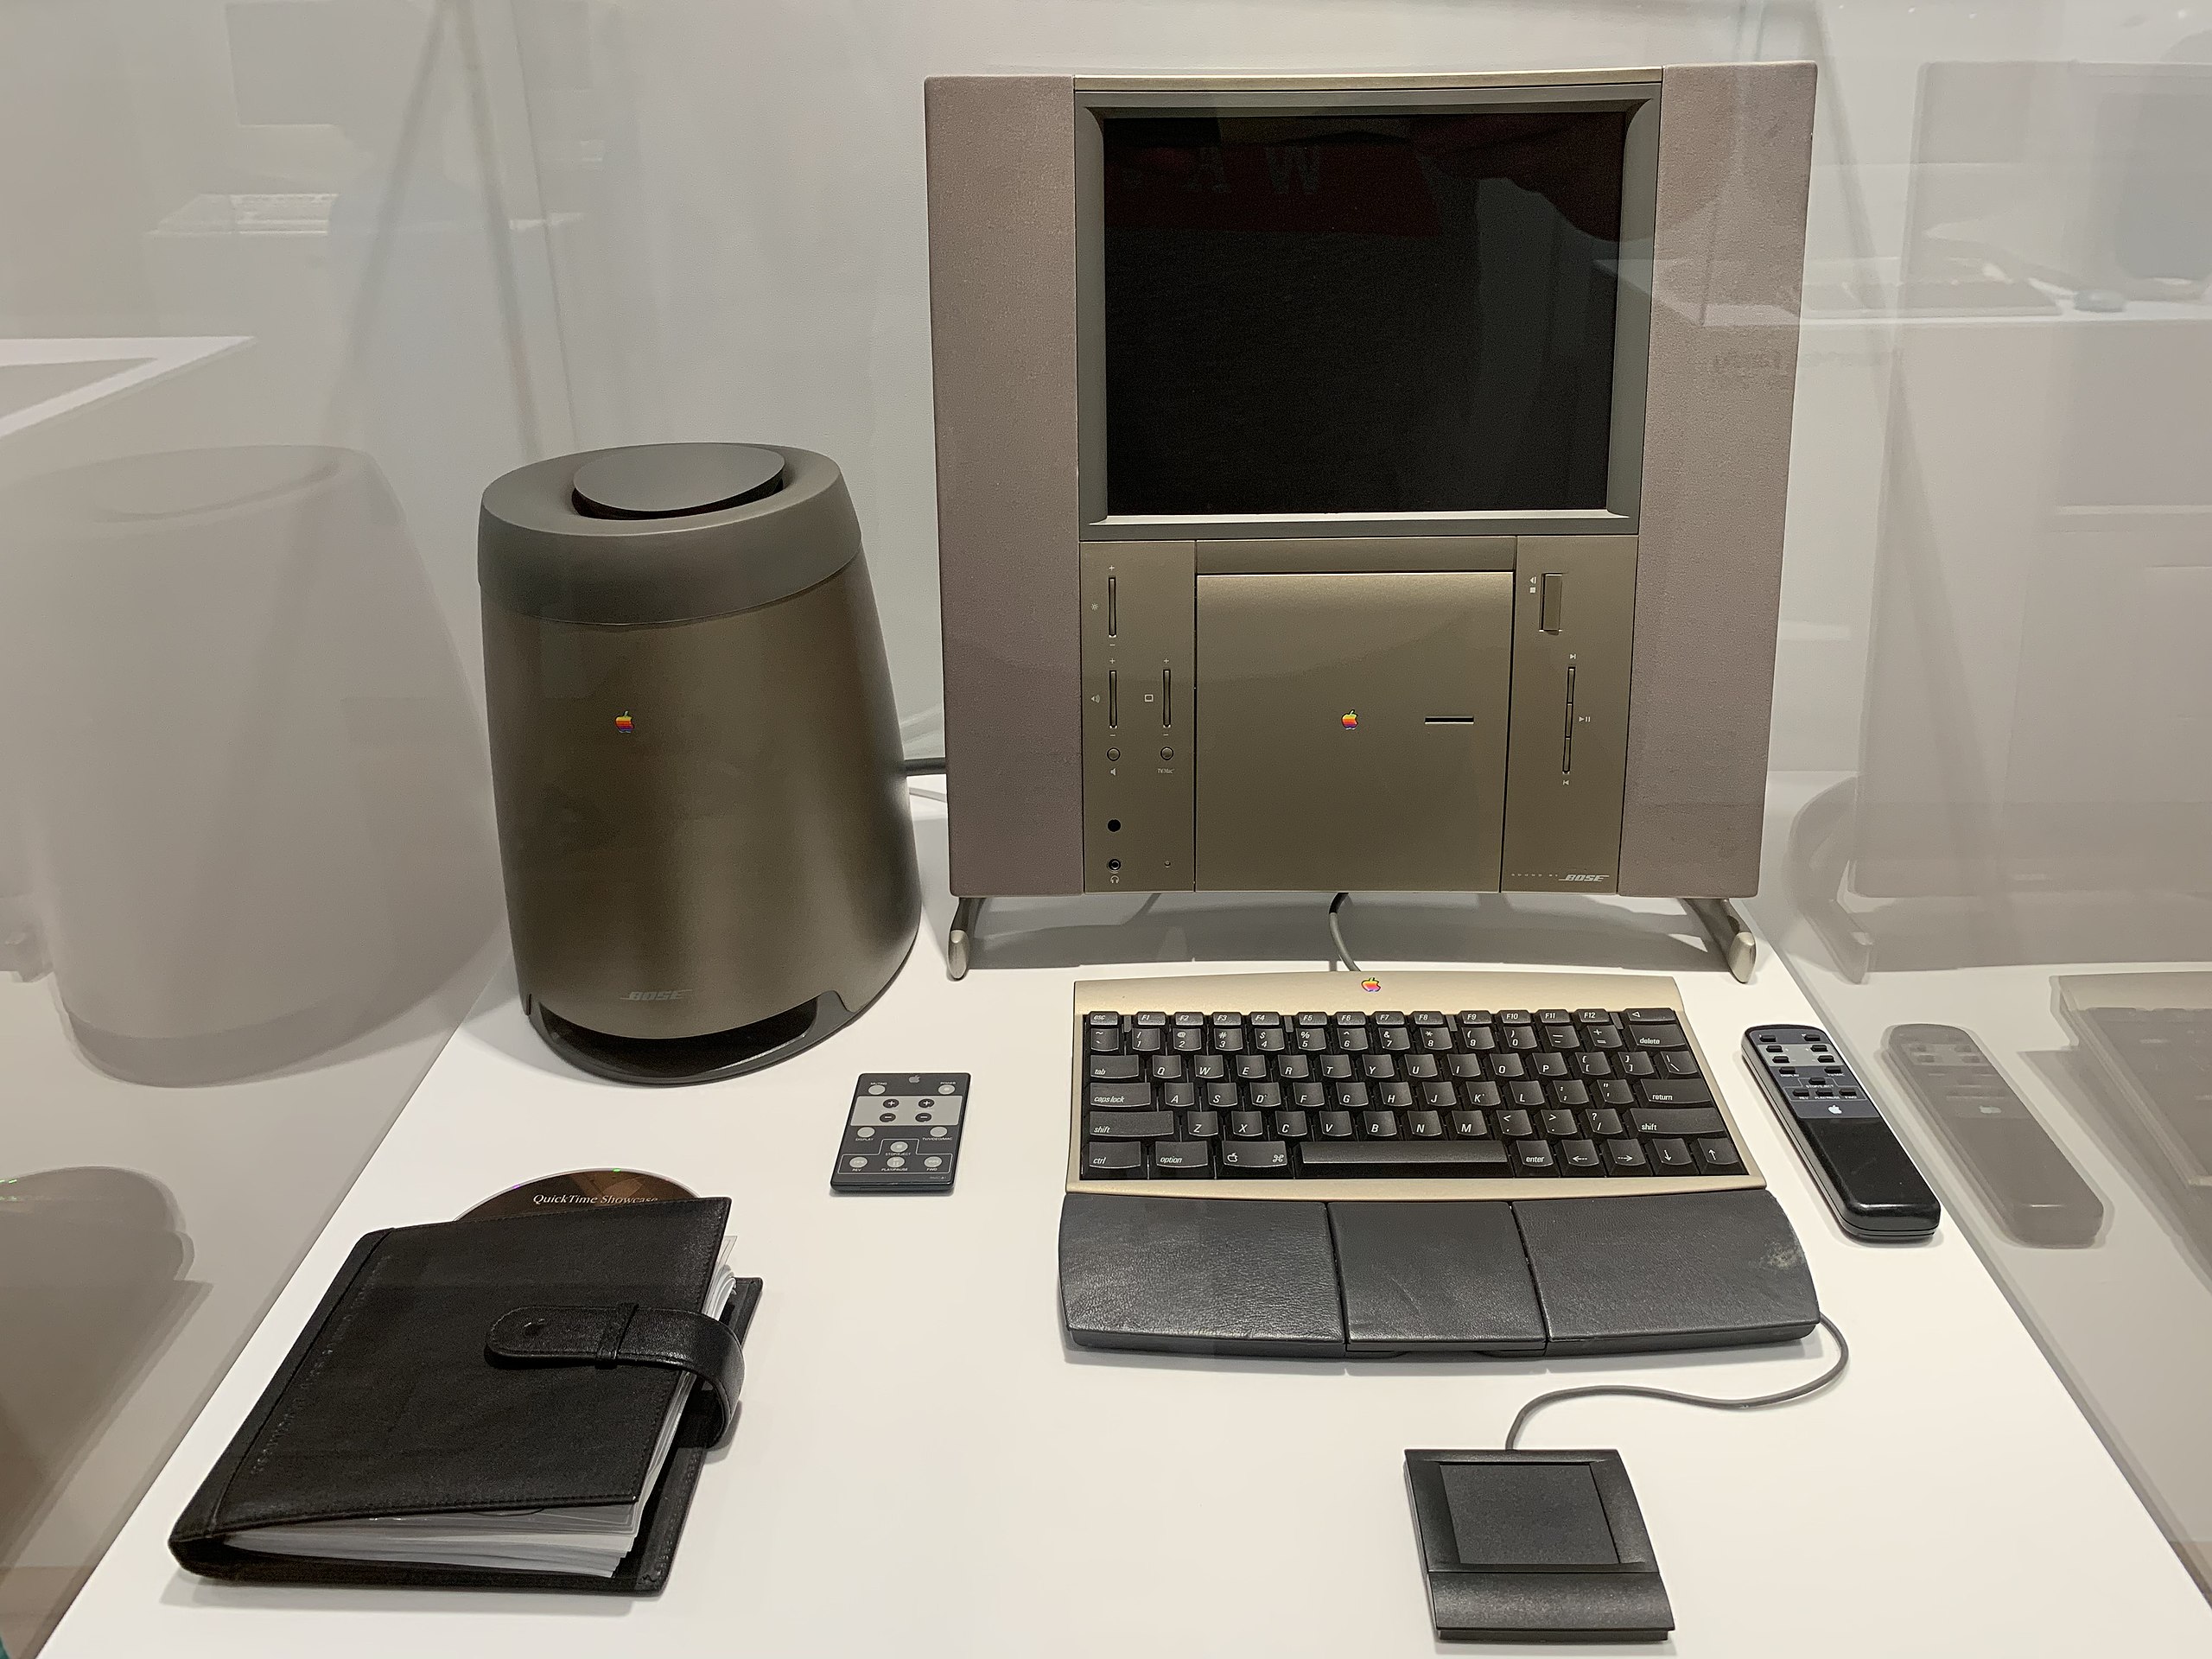 The 20th Anniversary Mac